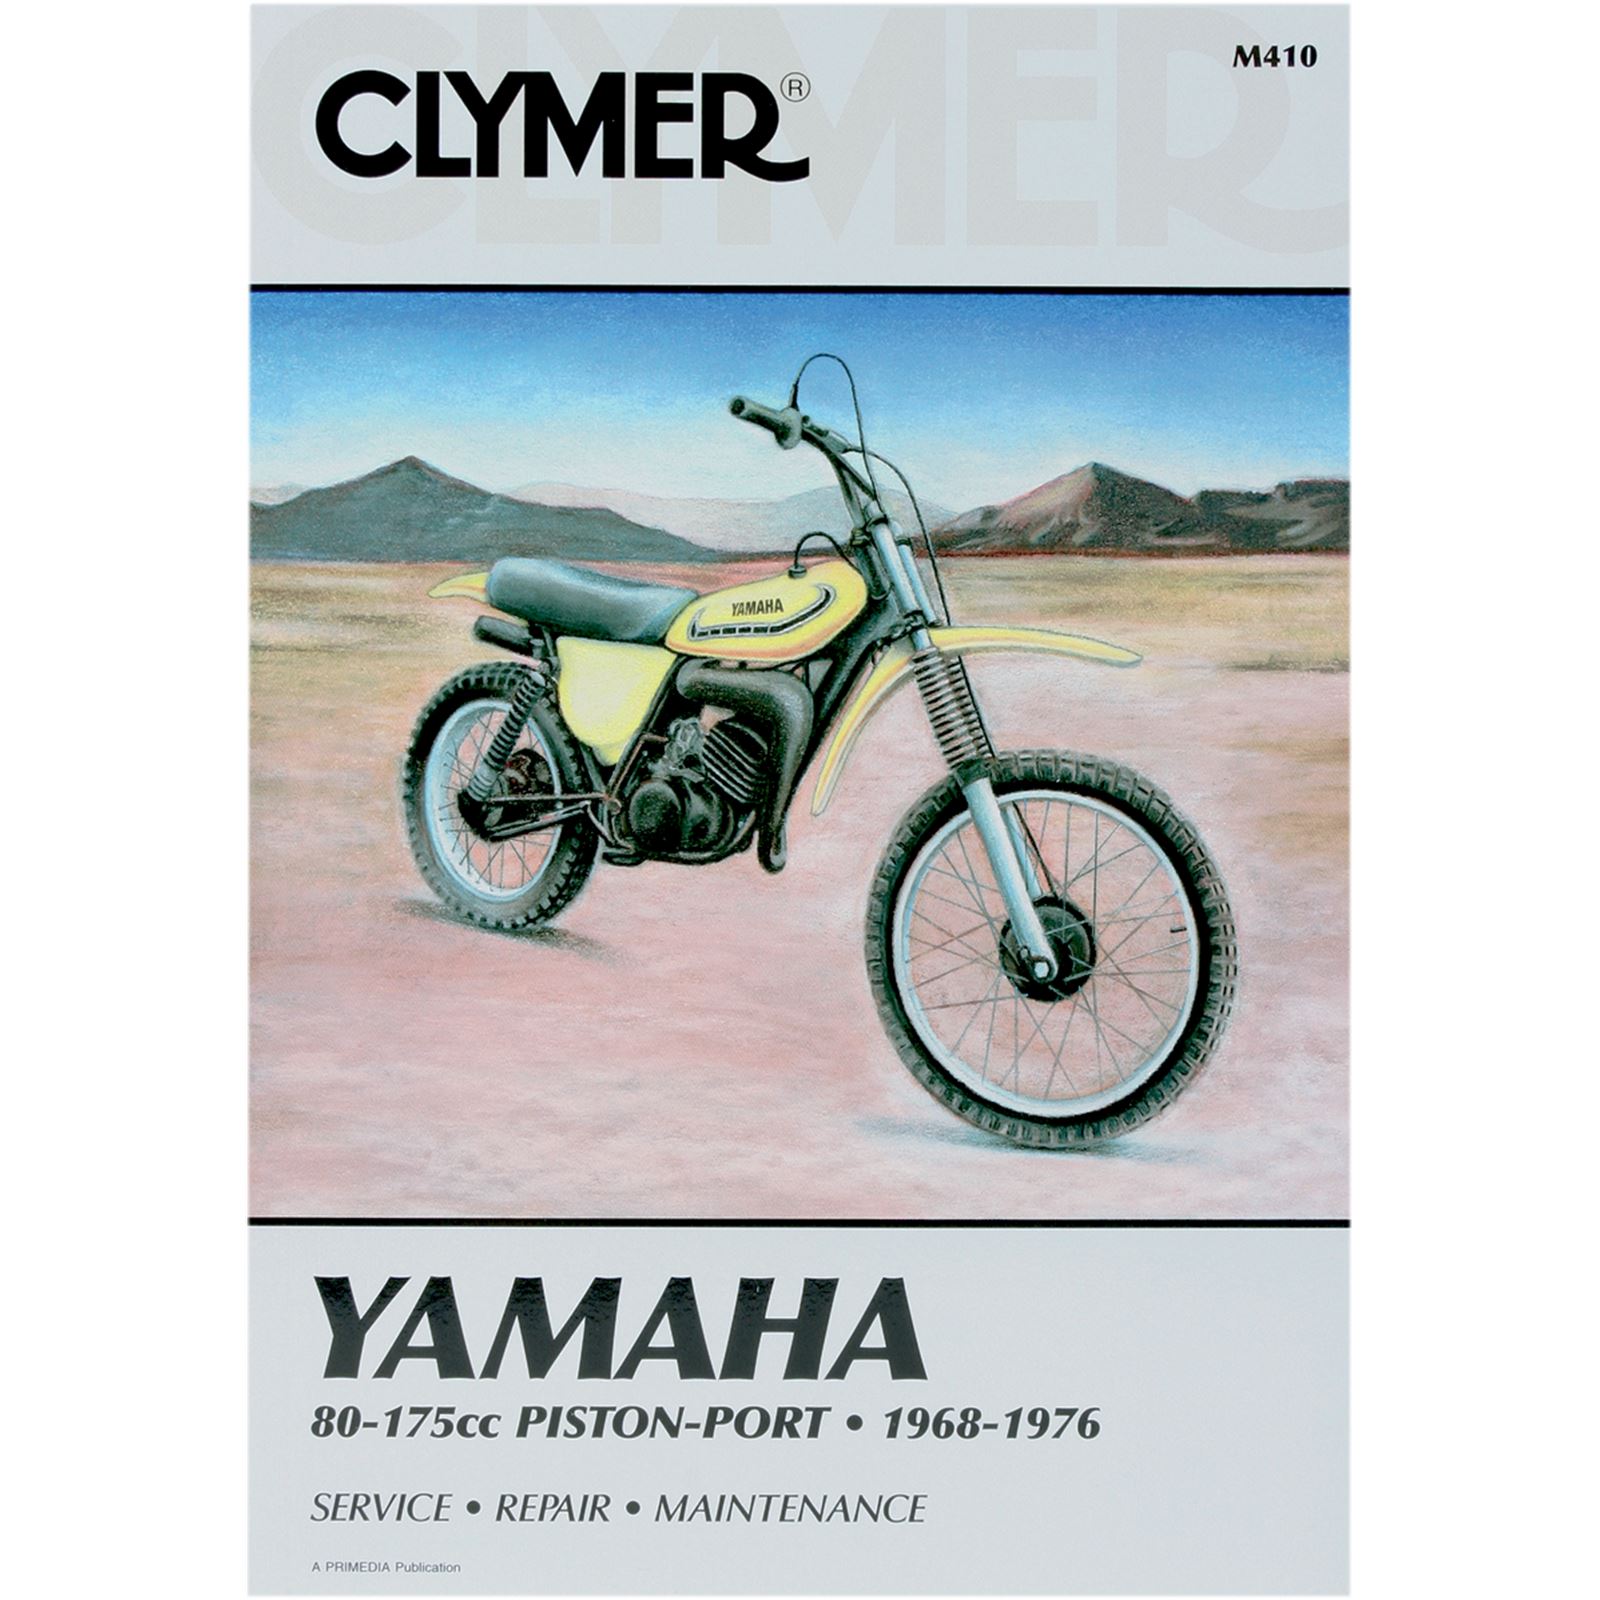 Clymer Manual for Yamaha 80-175 Piston-Port